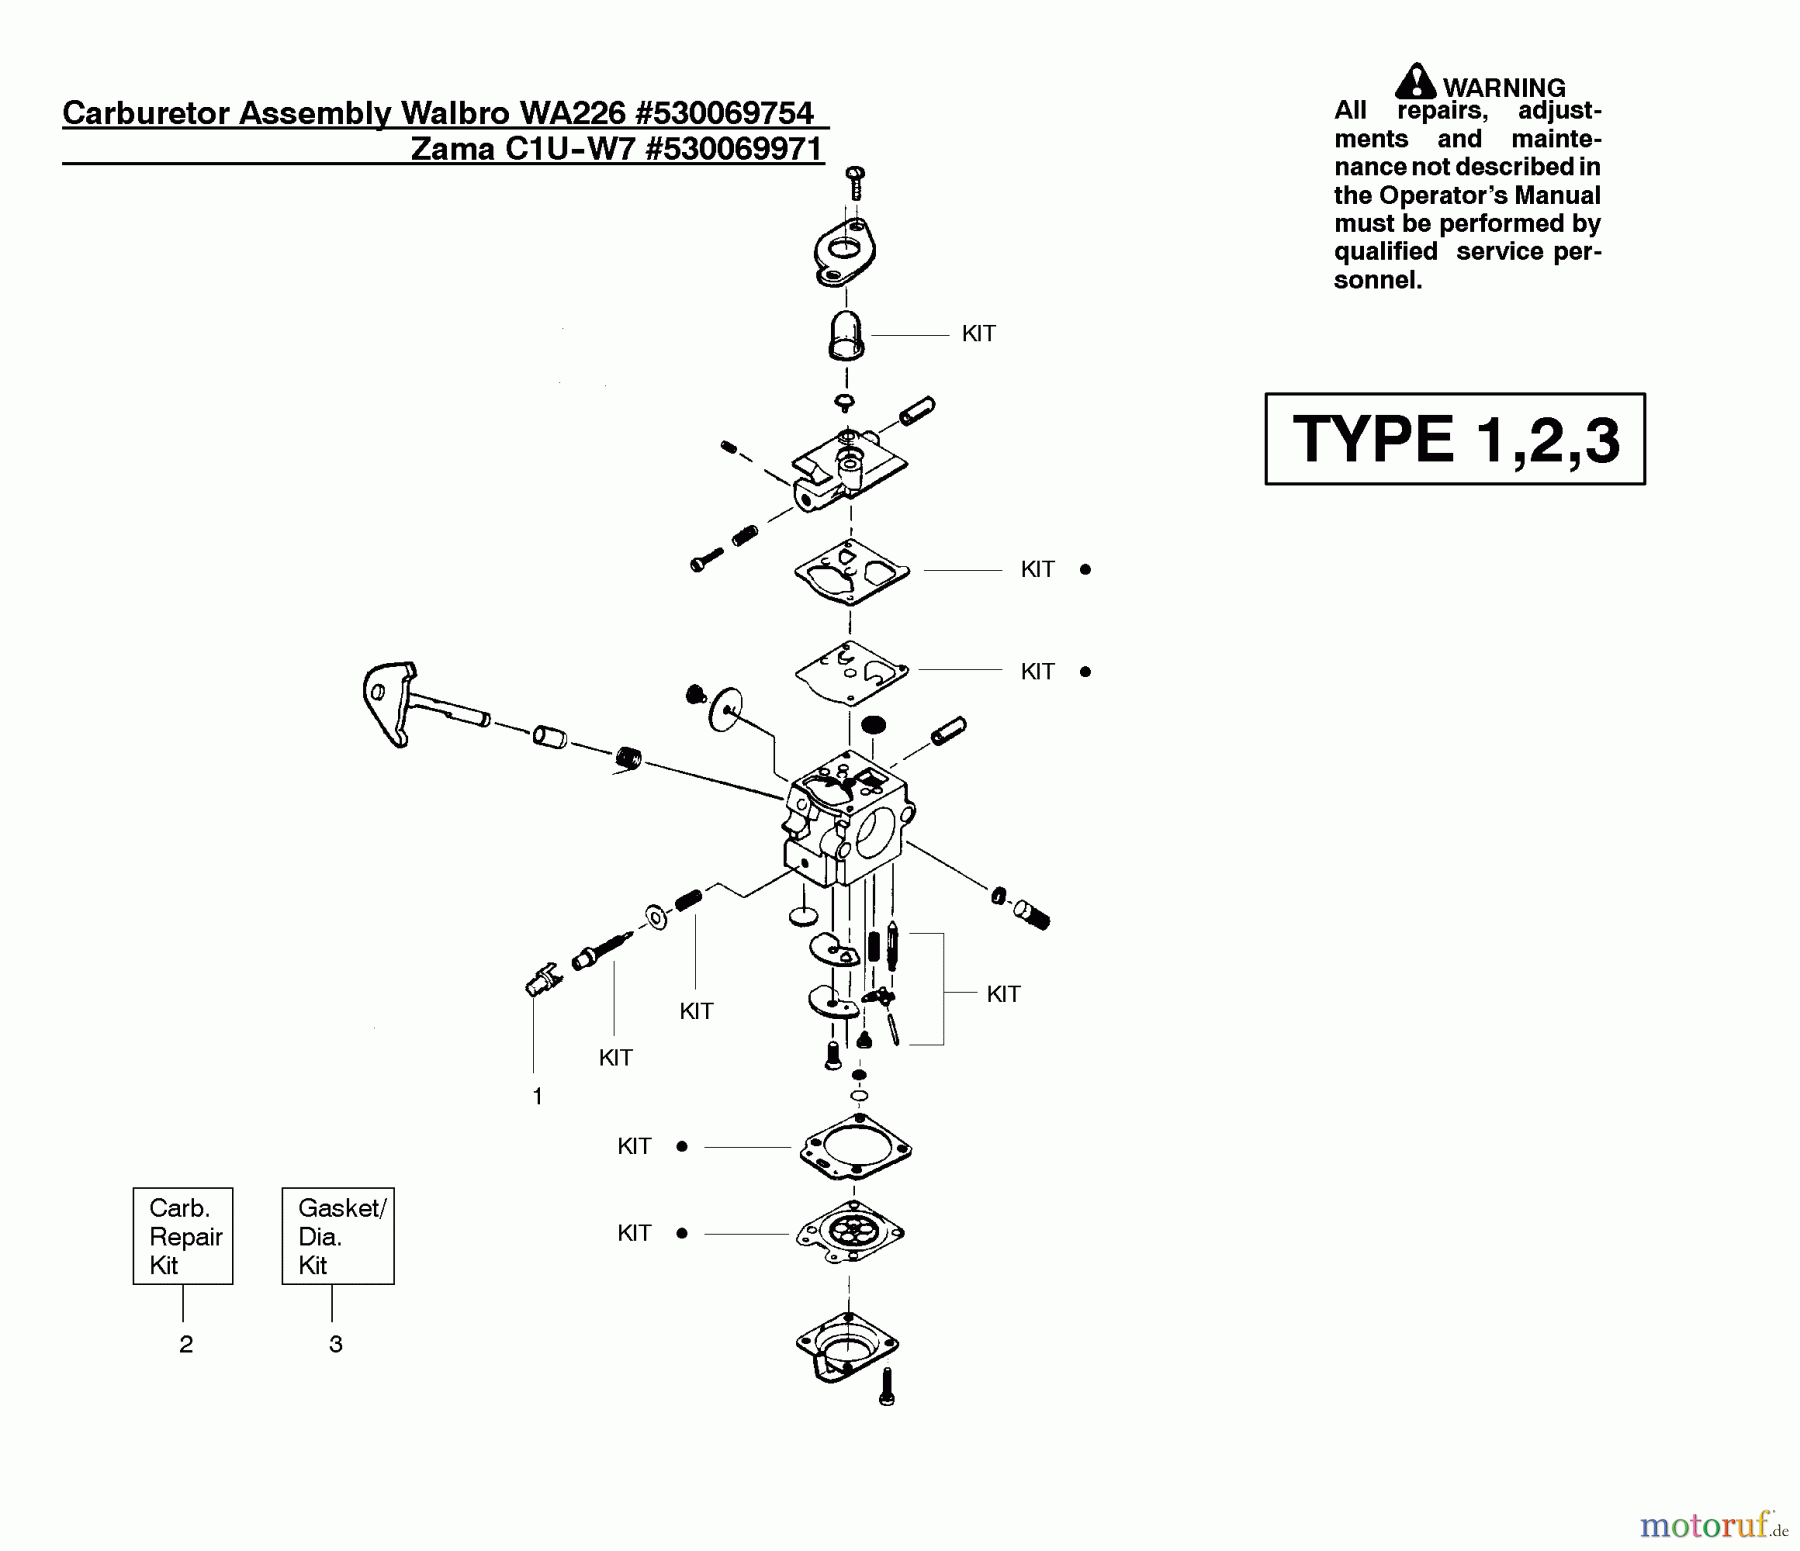  Poulan / Weed Eater Motorsensen, Trimmer PL500 (Type 3) - Weed Eater String Trimmer Carburetor Assembly (WT226) P/N 530069754, (Zama C1U-W70) P/N 530069971